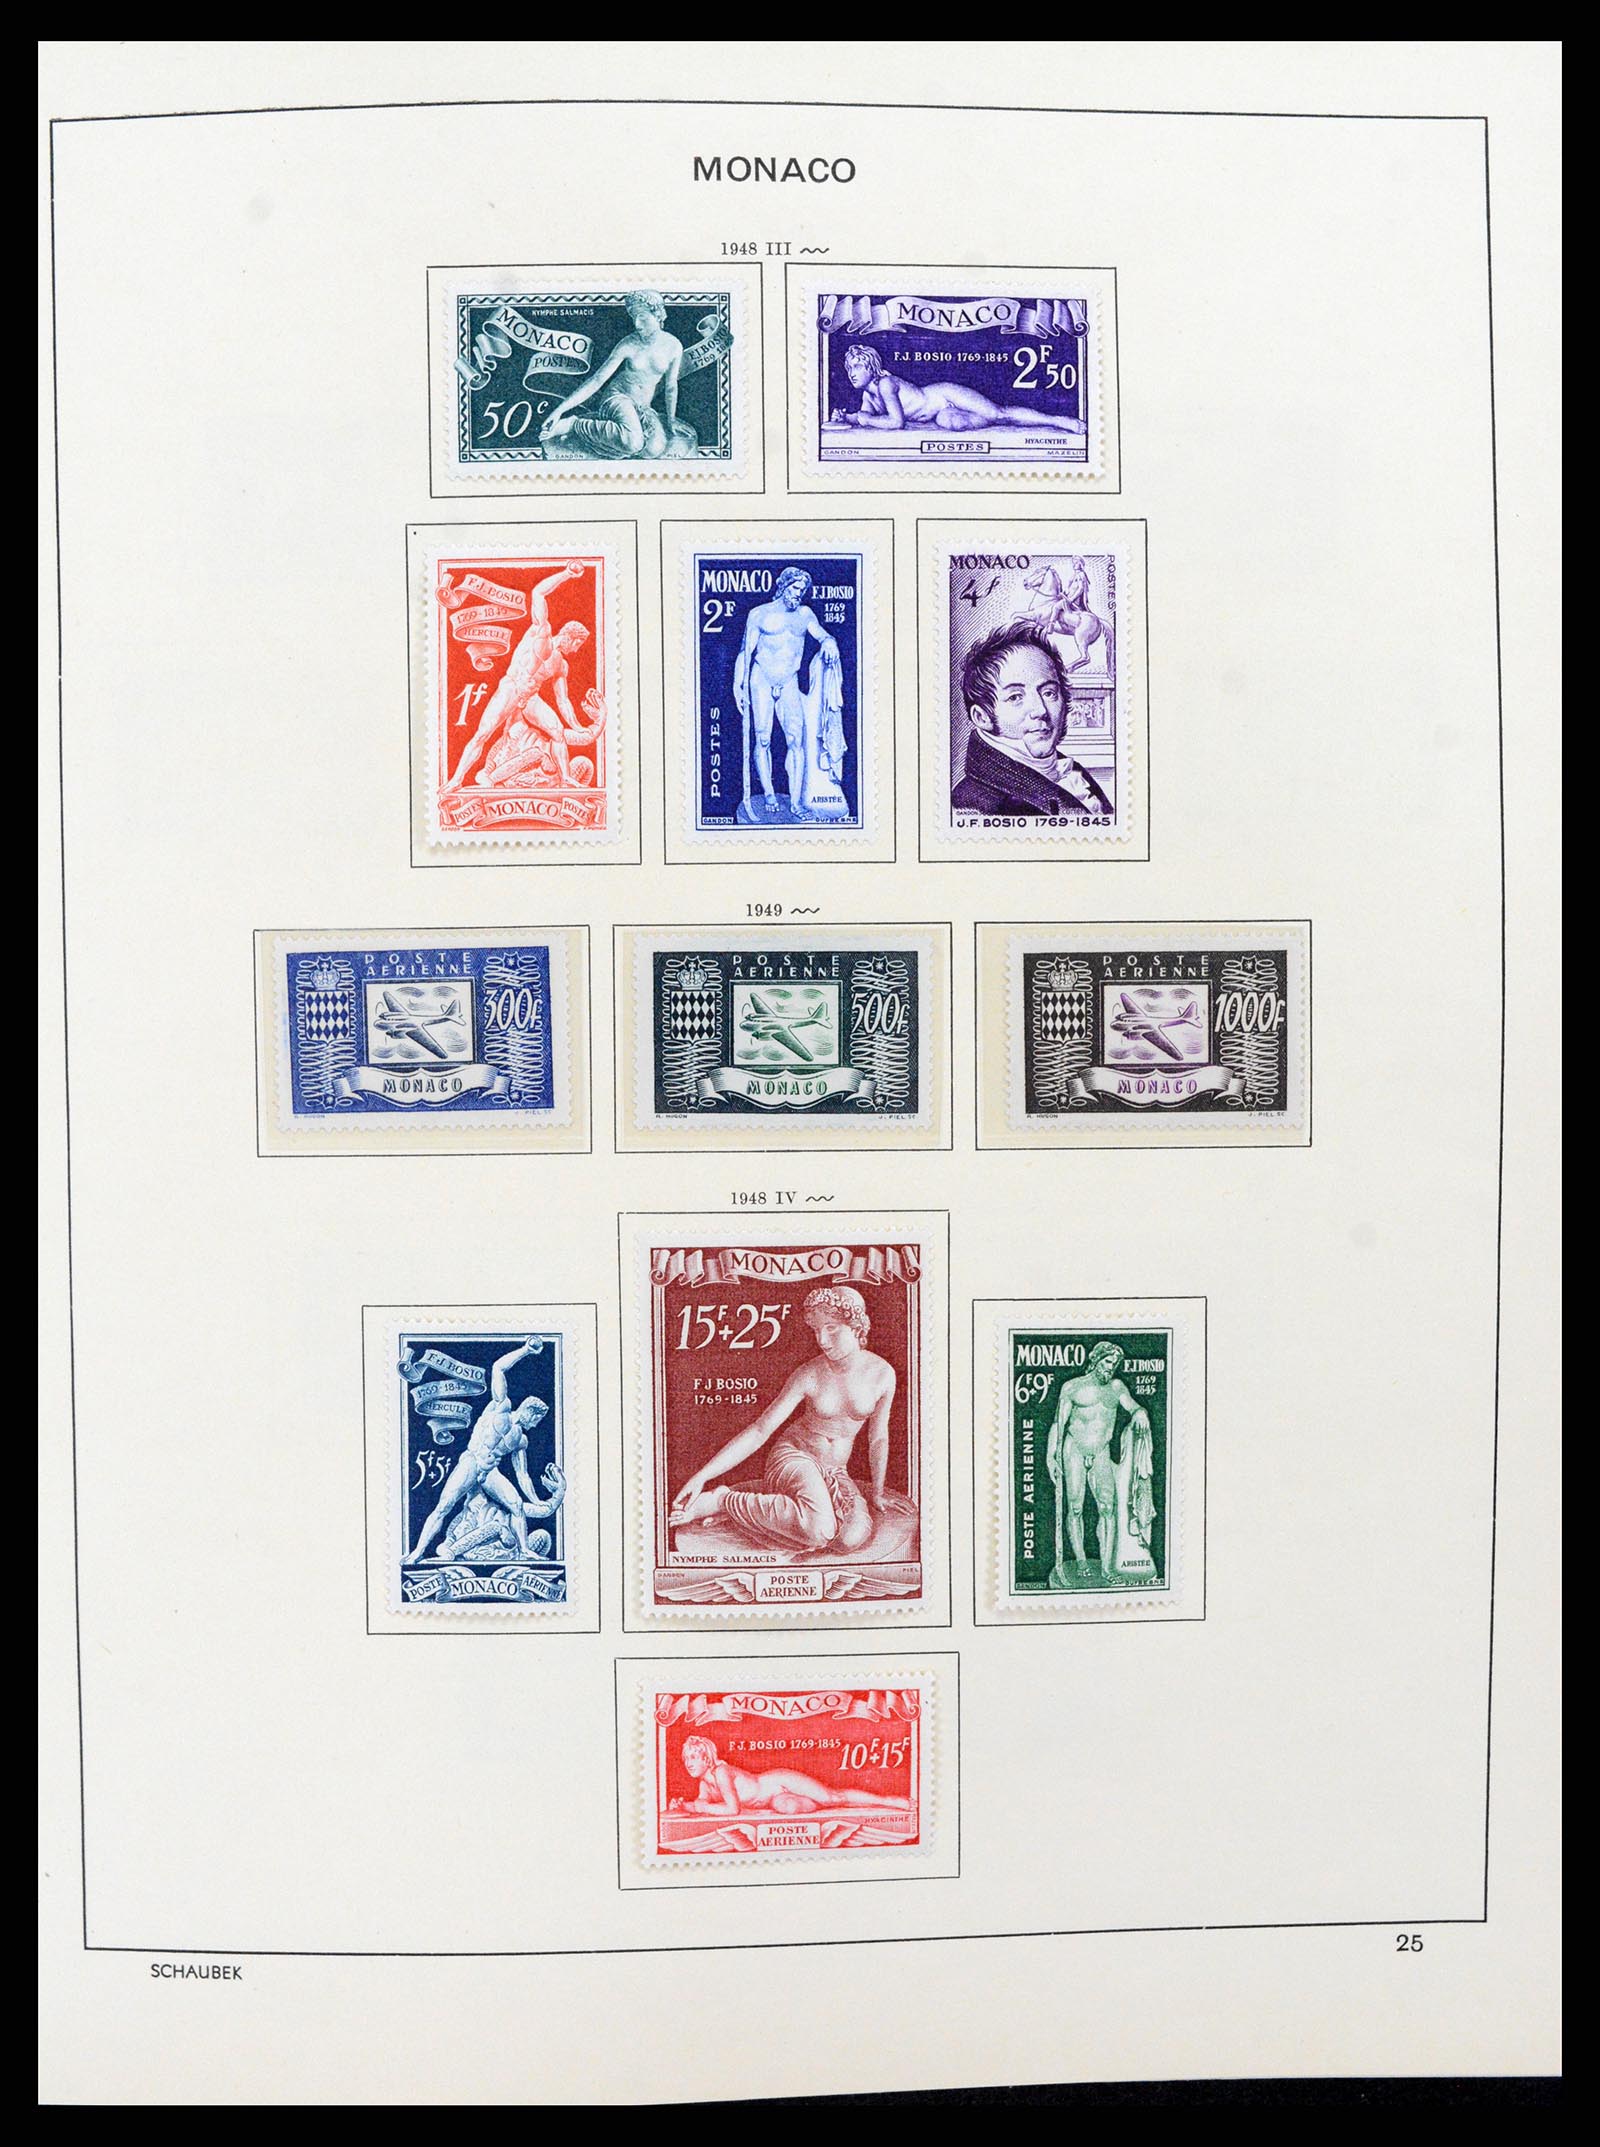 37570 026 - Stamp collection 37570 Monaco 1885-2013.